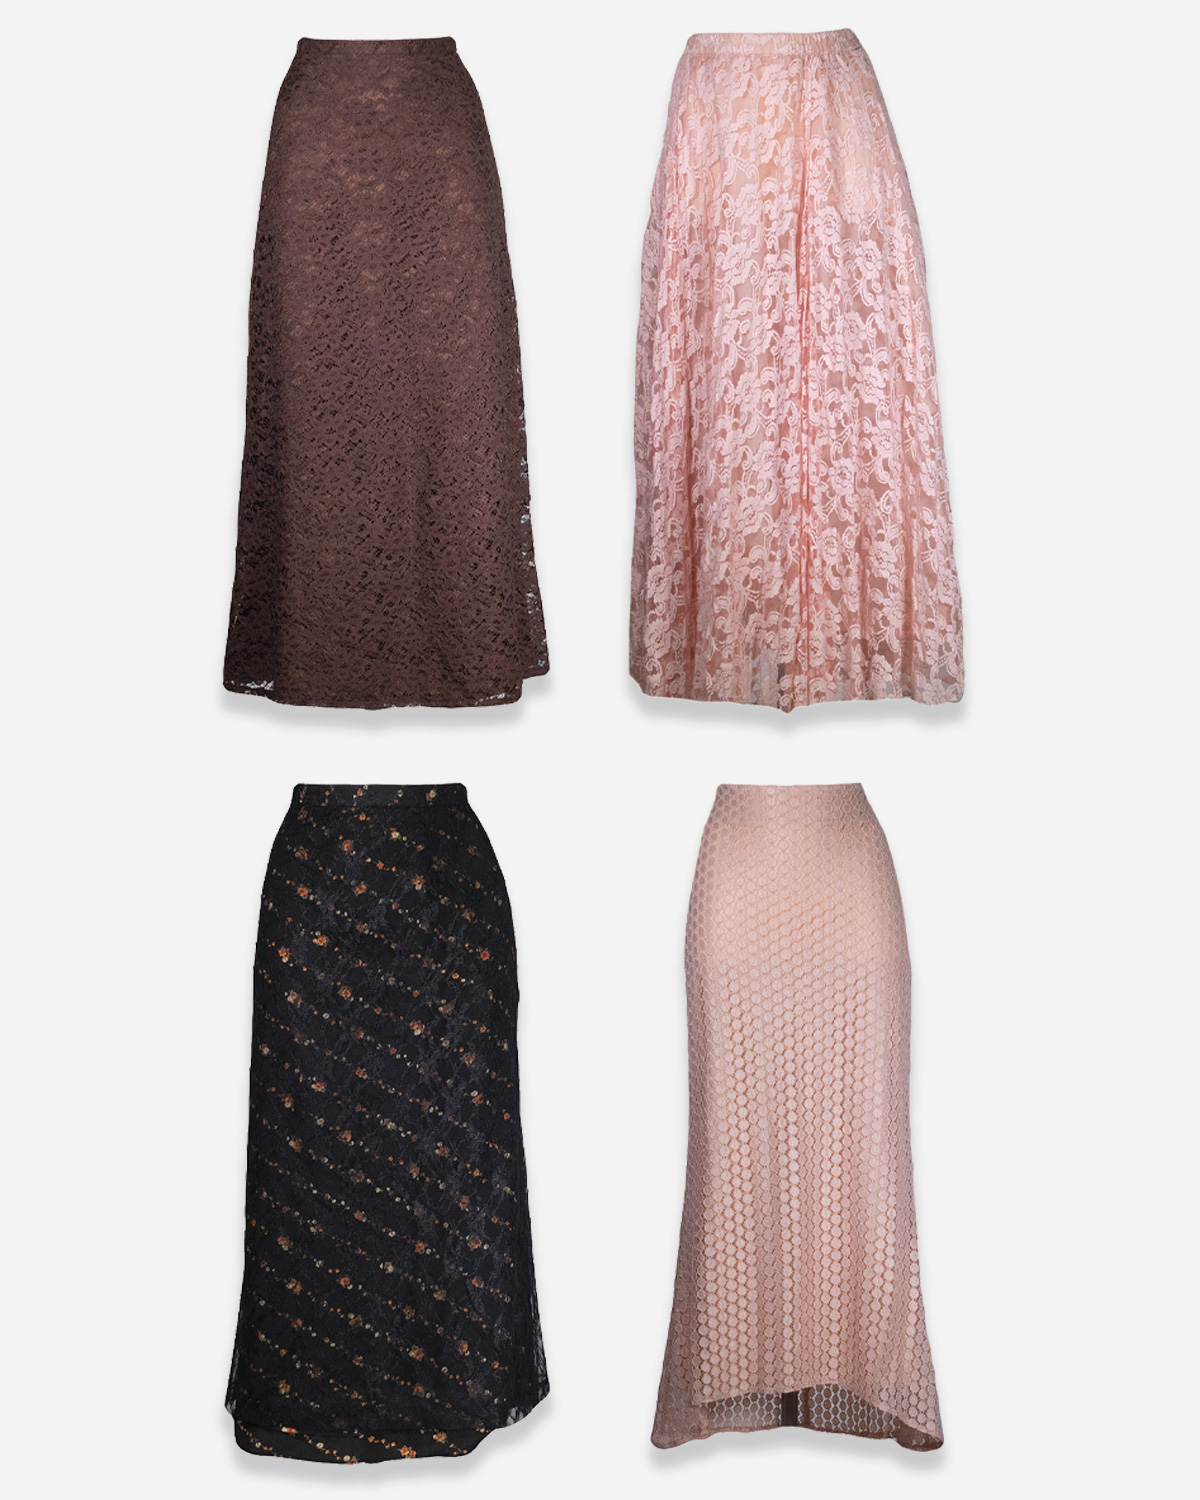 Women's vintage lace long skirts: 4 pieces